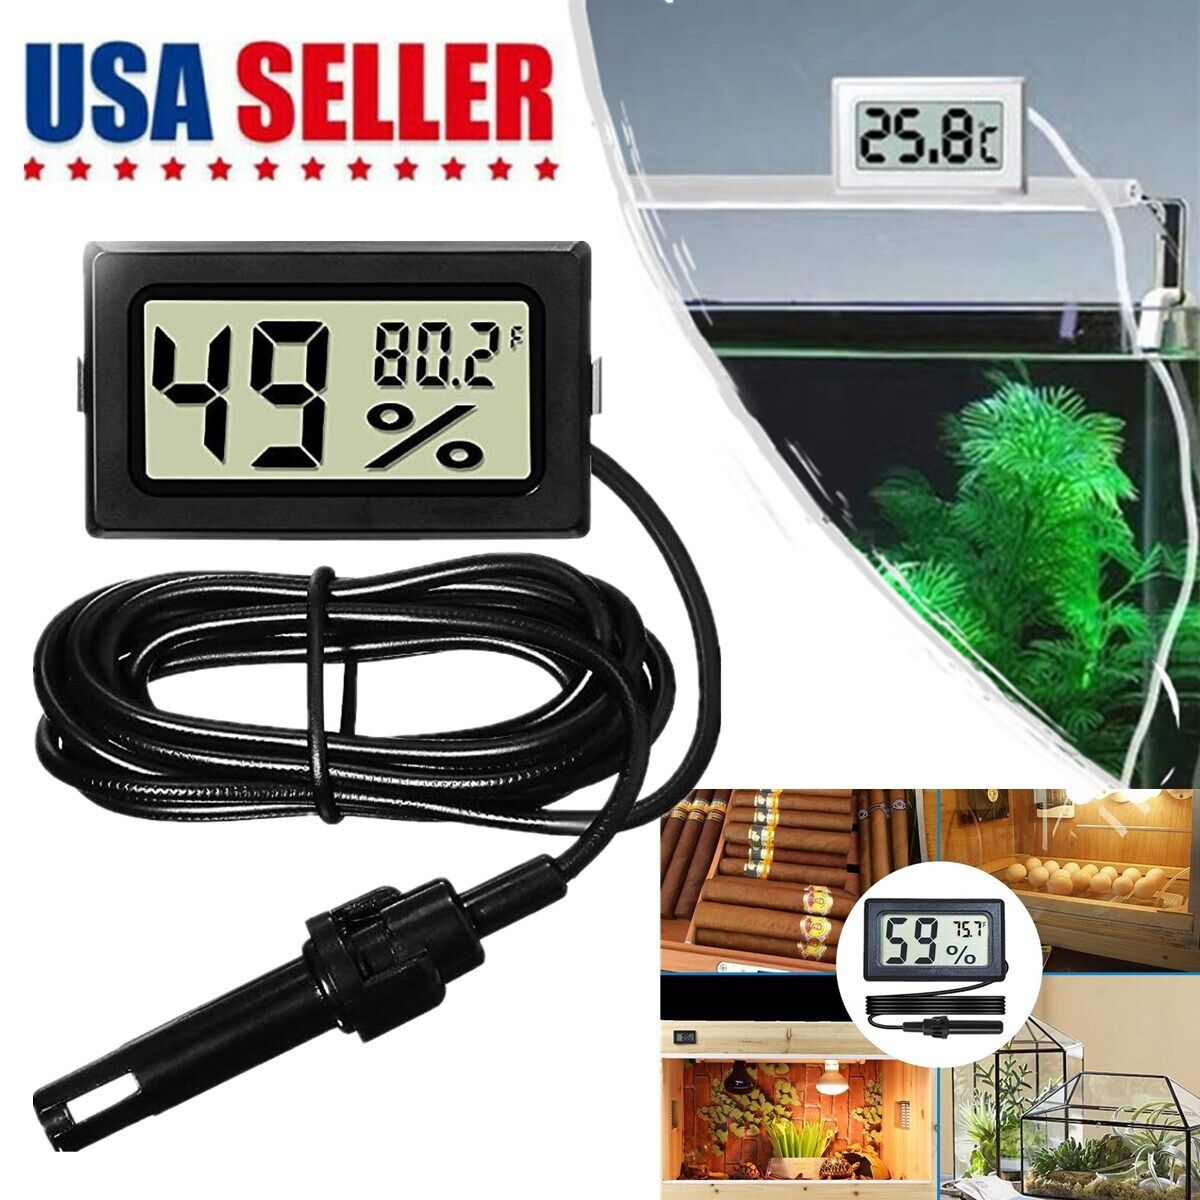 LCD Digital Thermometer Hygrometer Aquarium Humidity Meter Gauge Fahrenheit US